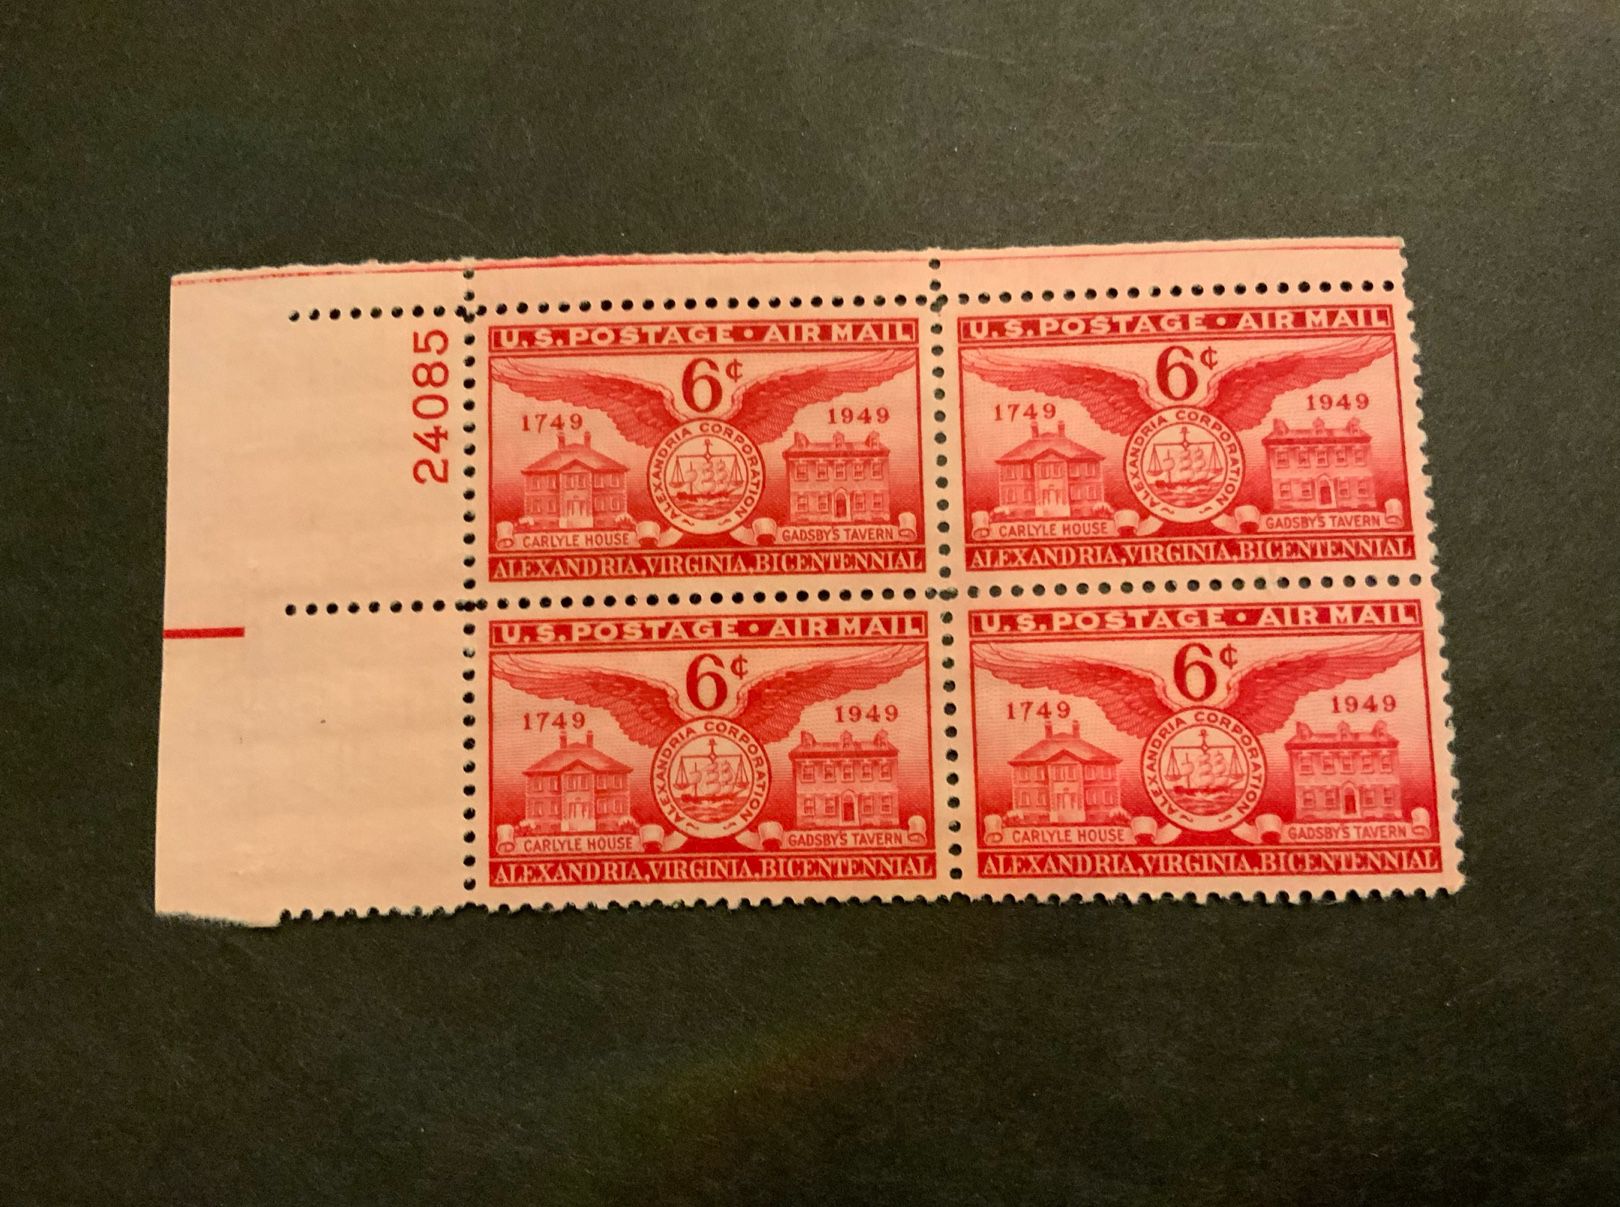 Alexandria, Virginia Bicentennial Postage Stamp Block